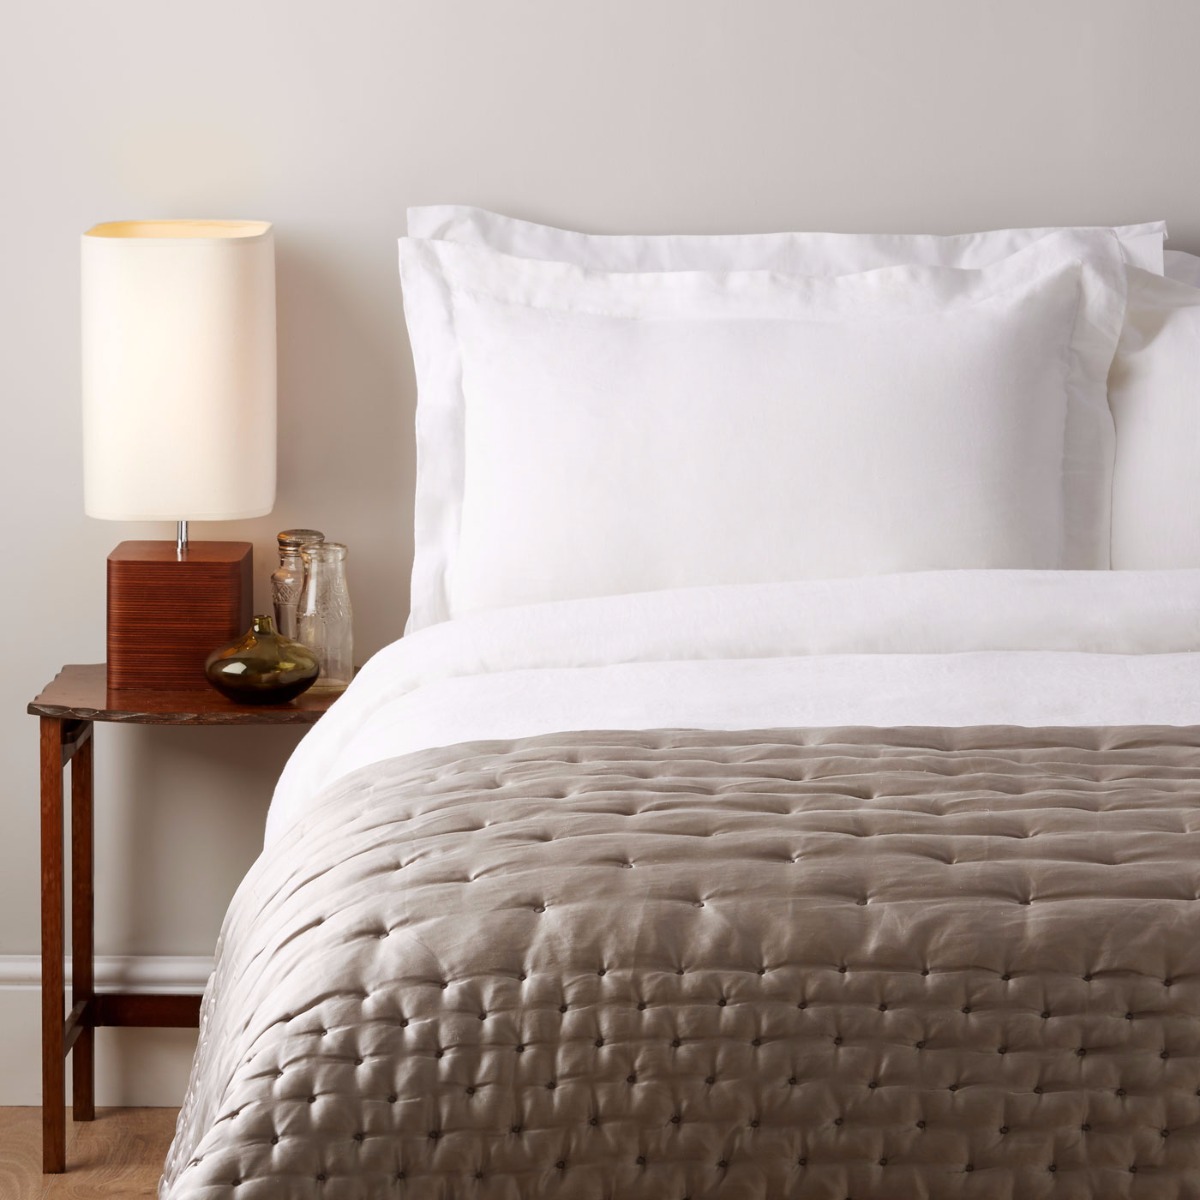 Bed linen 100% pure French linen - soaku0026sleep PYSHUJC